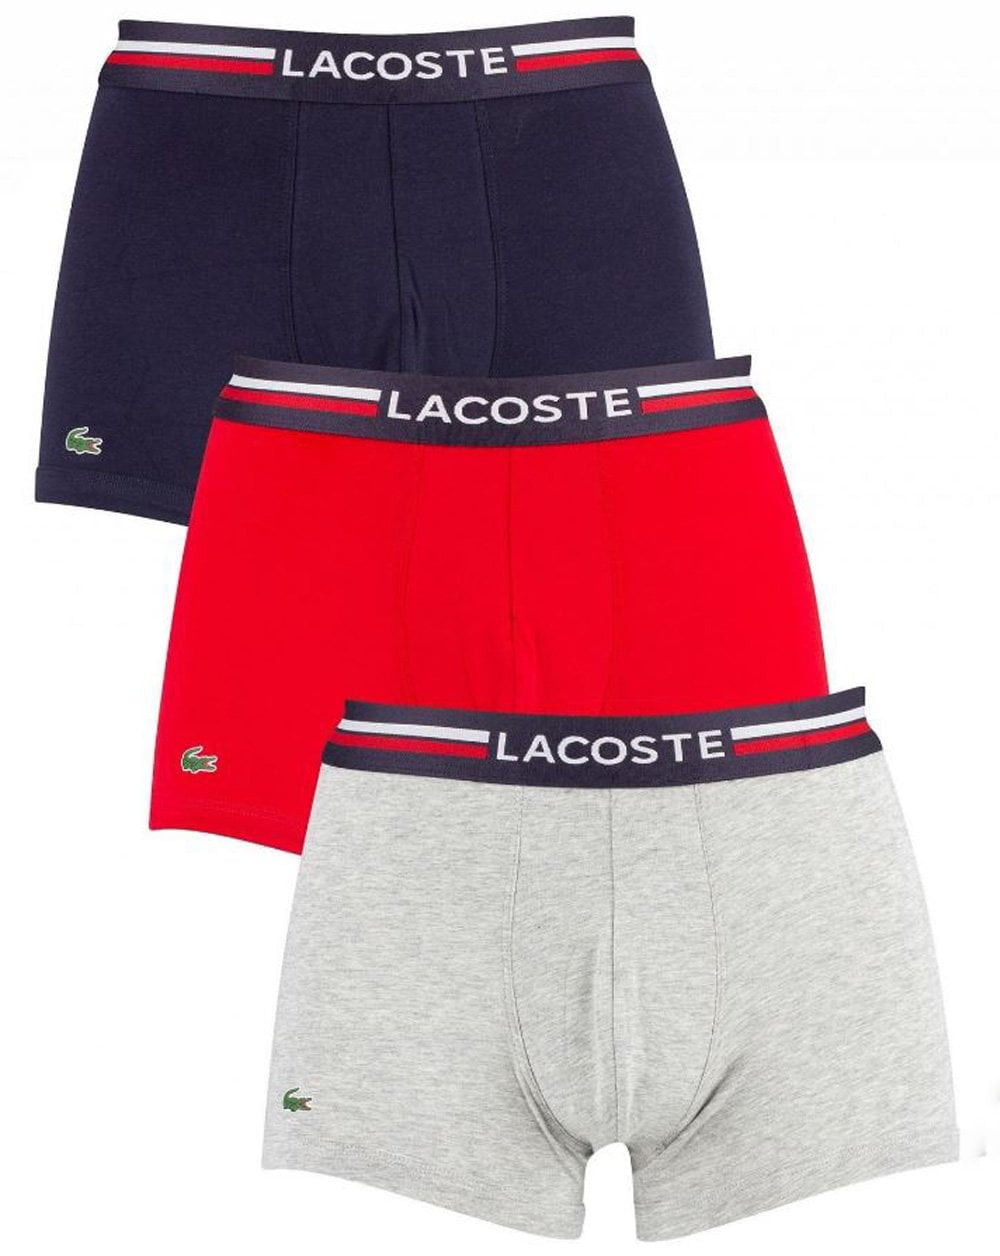 Men's Cotton Stretch Underwear Men's Boxer briefs Lacoste